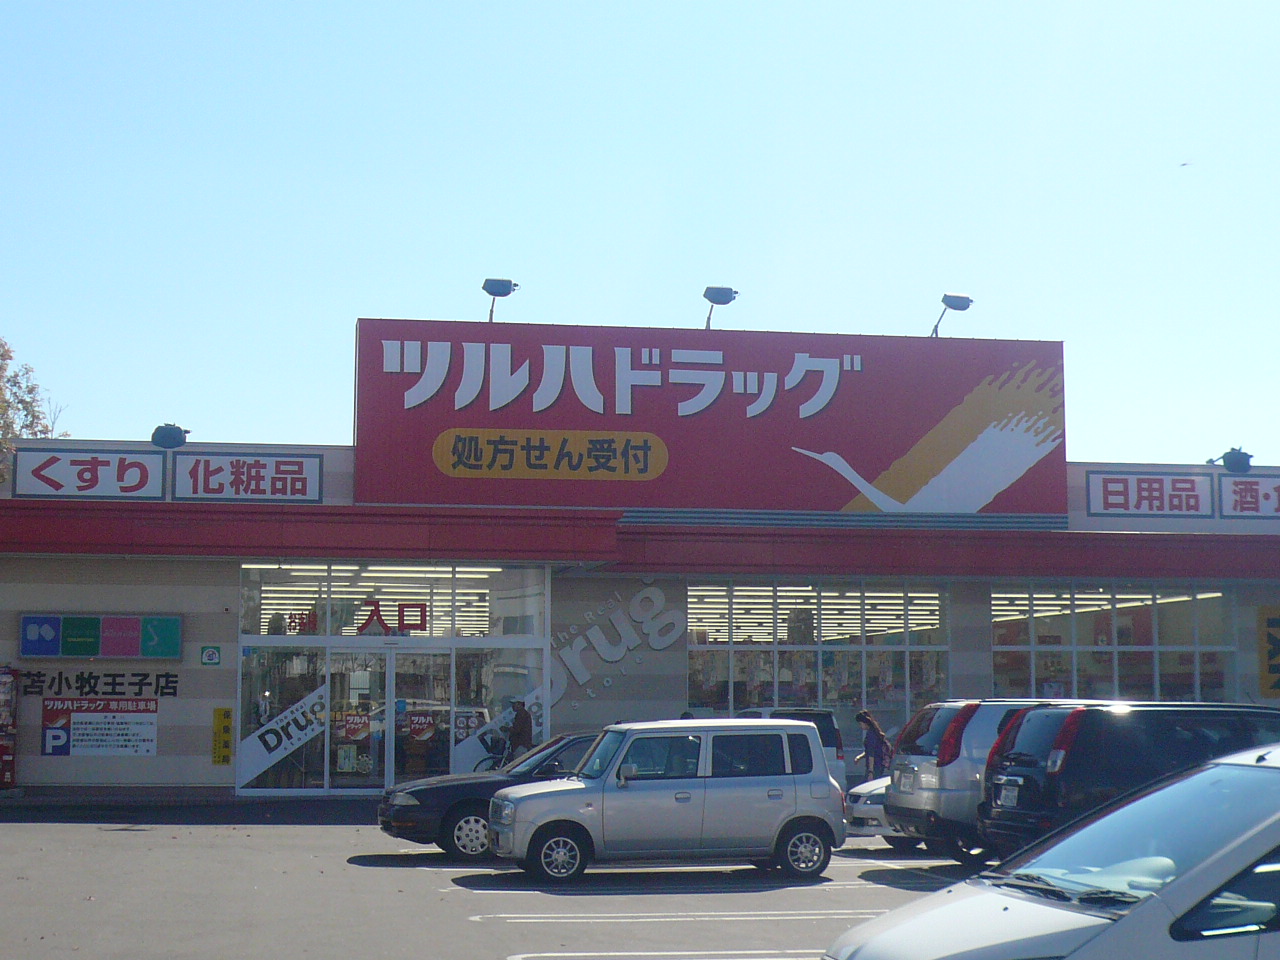 Dorakkusutoa. Tsuruha drag Tomakomai Prince shop 967m until (drugstore)